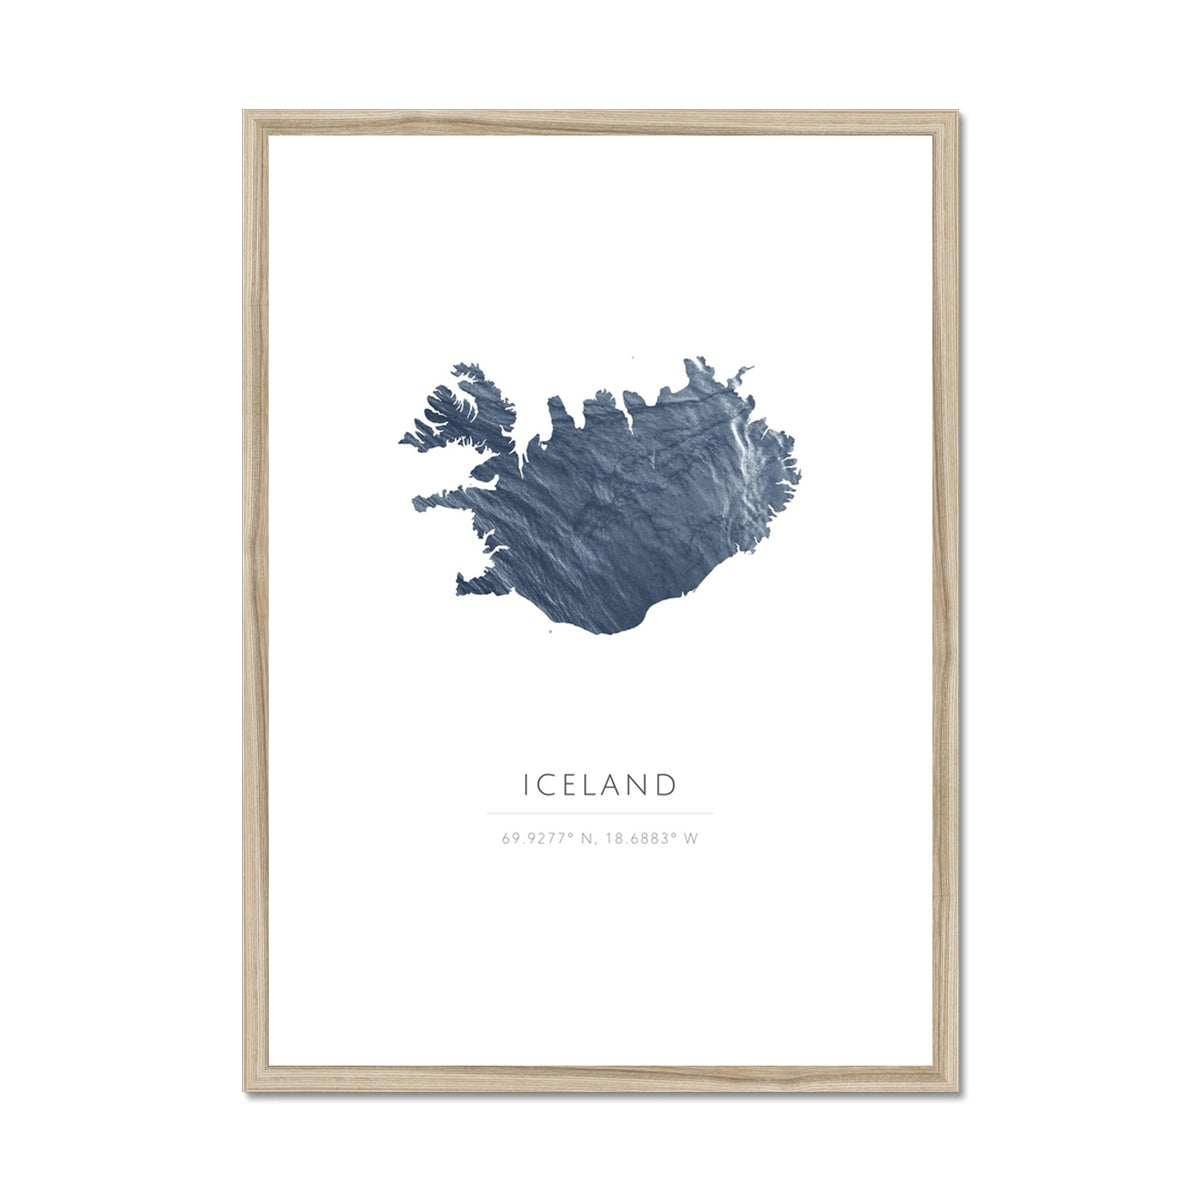 Iceland -  Framed & Mounted Print - For Richard